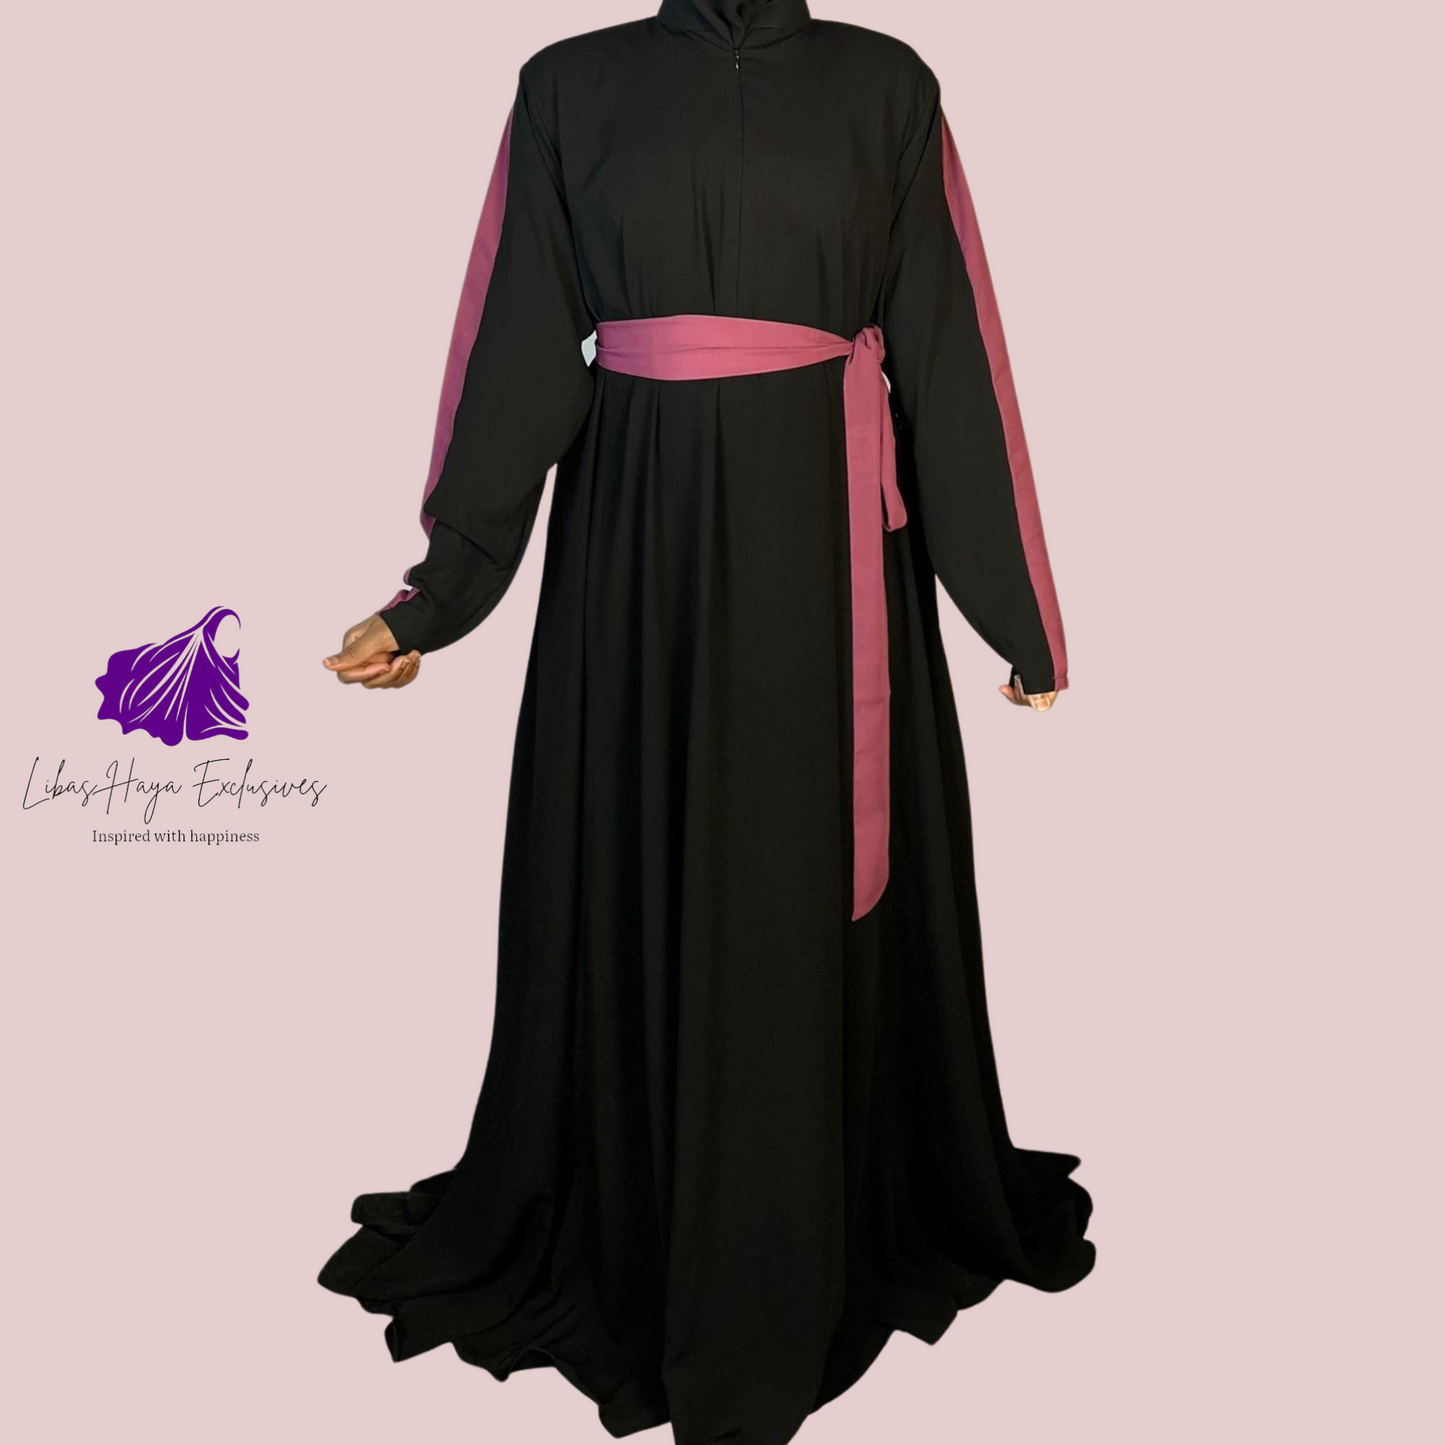 Abaya Asma - Black & Mauve Abaya dress with Pockets and zippered sleeves.